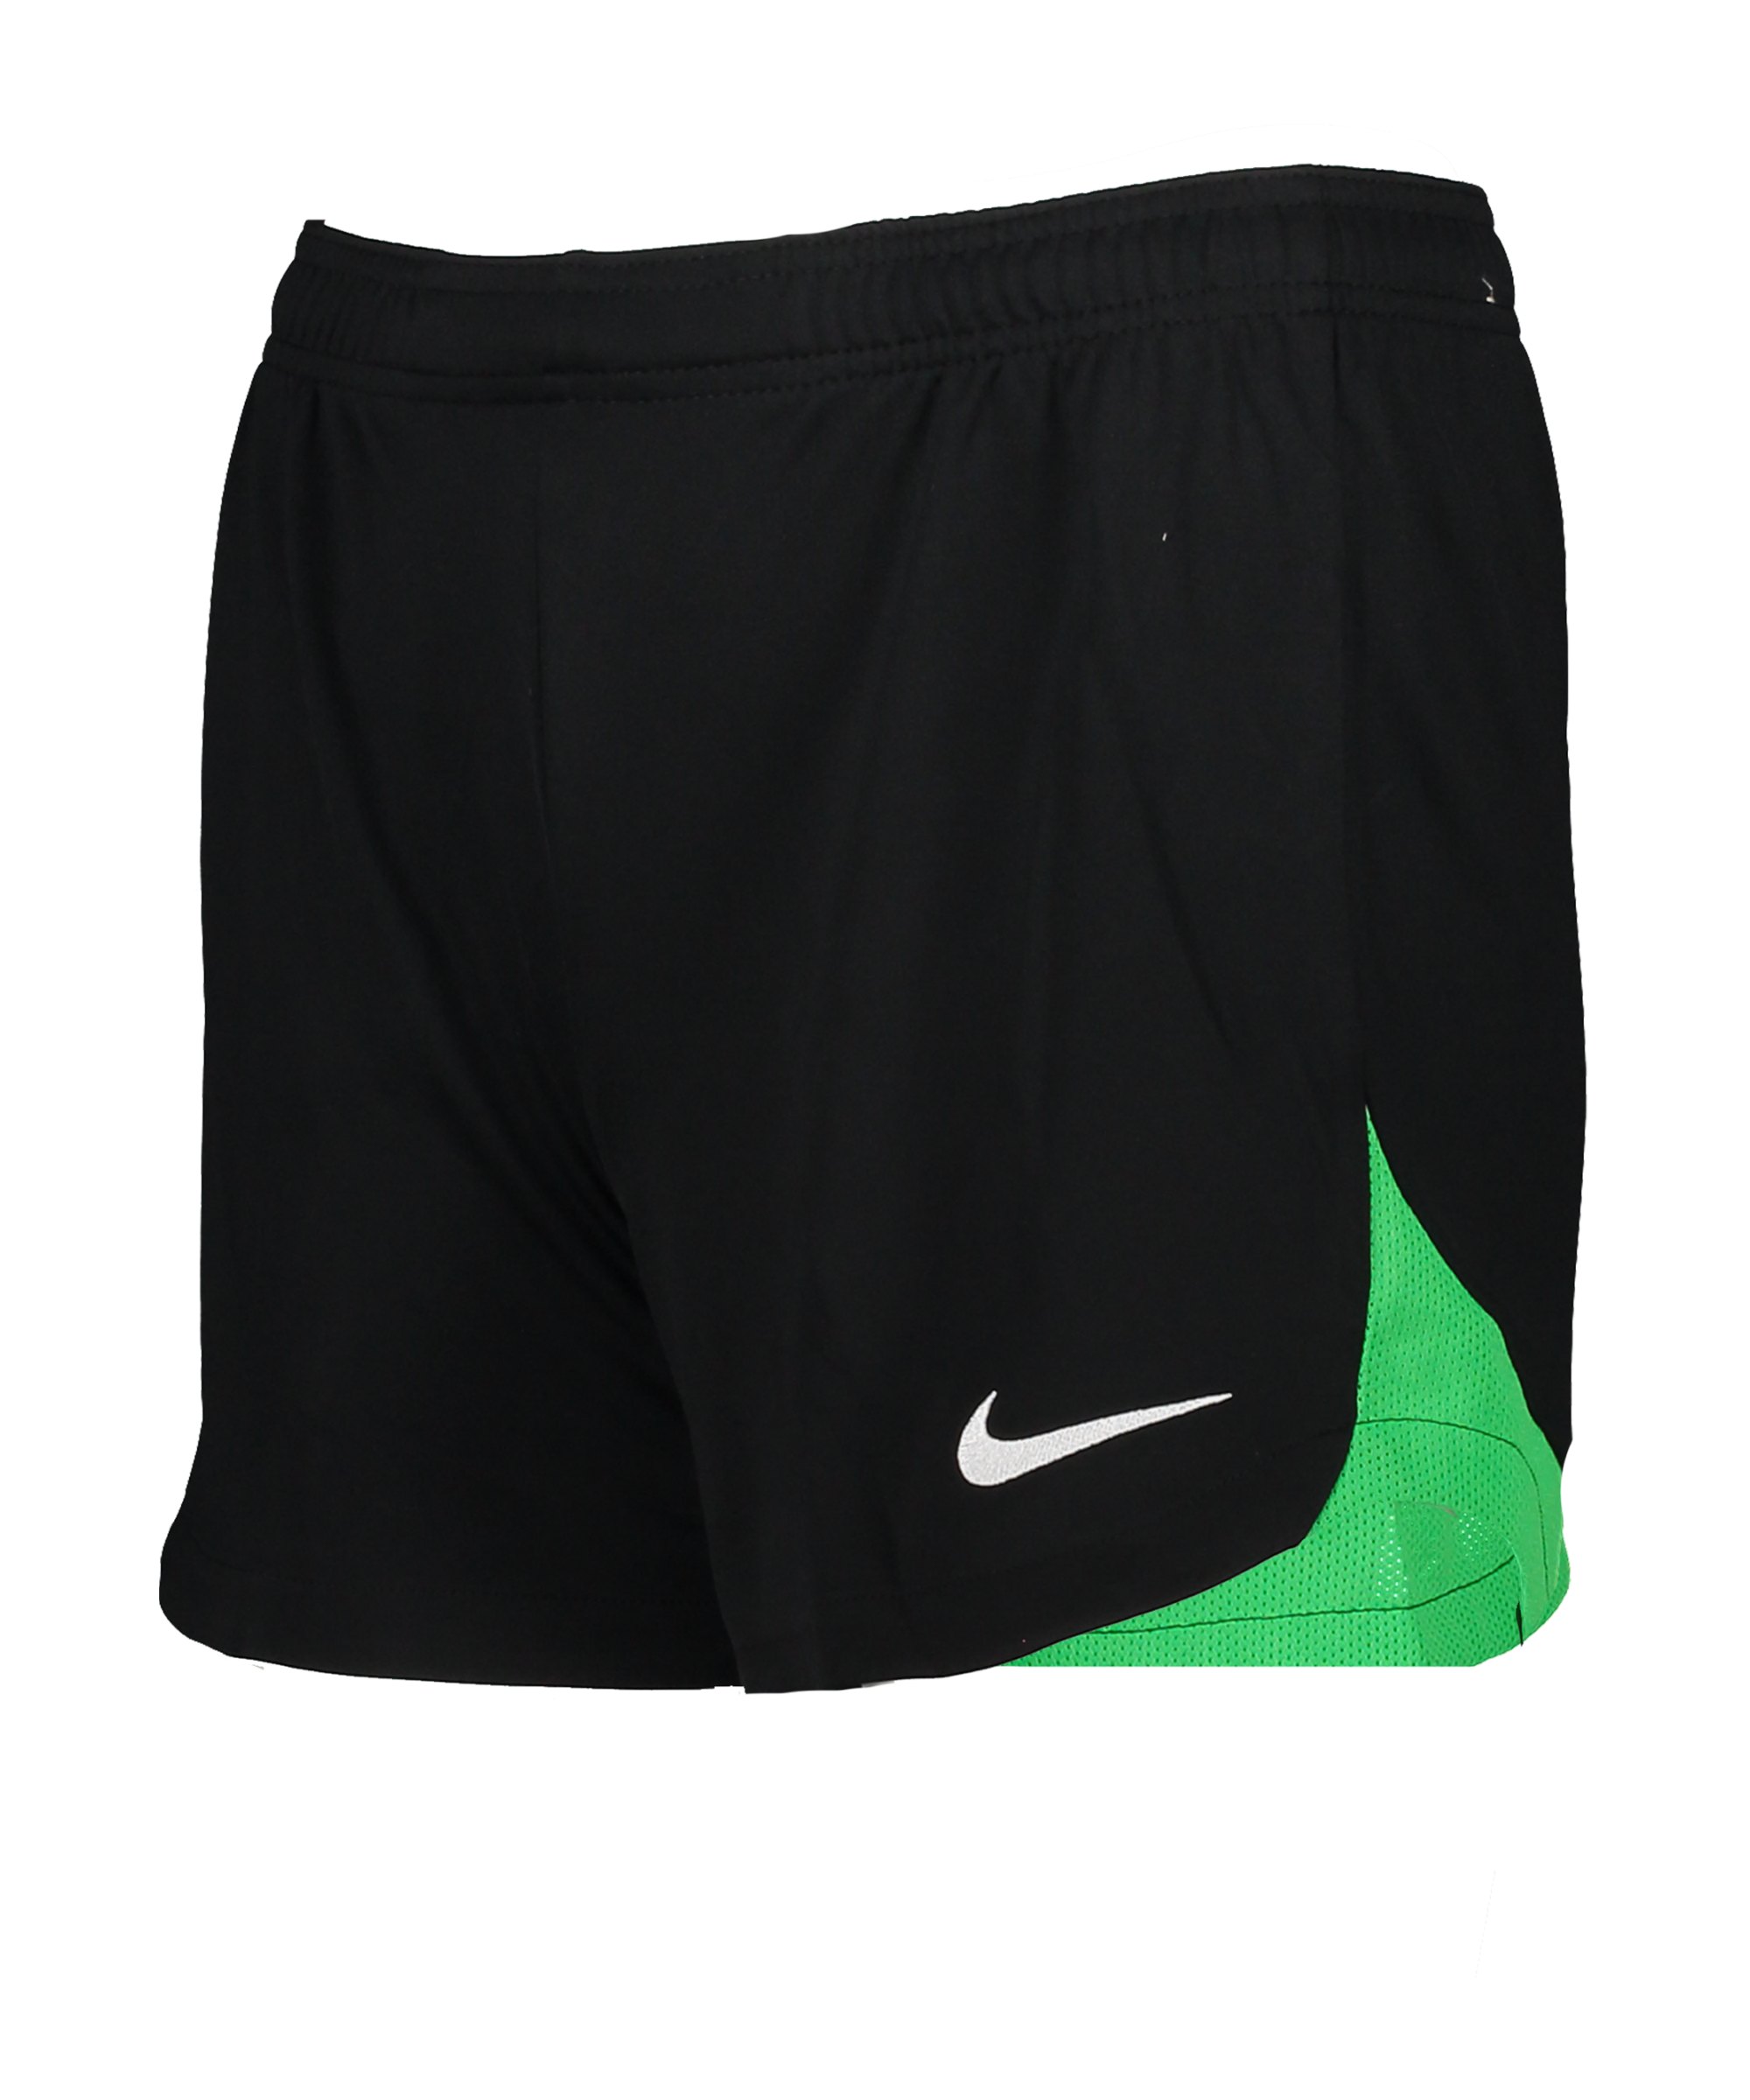 Nike Academy Pro Training Short Damen Schwarz Grün F011 - schwarz